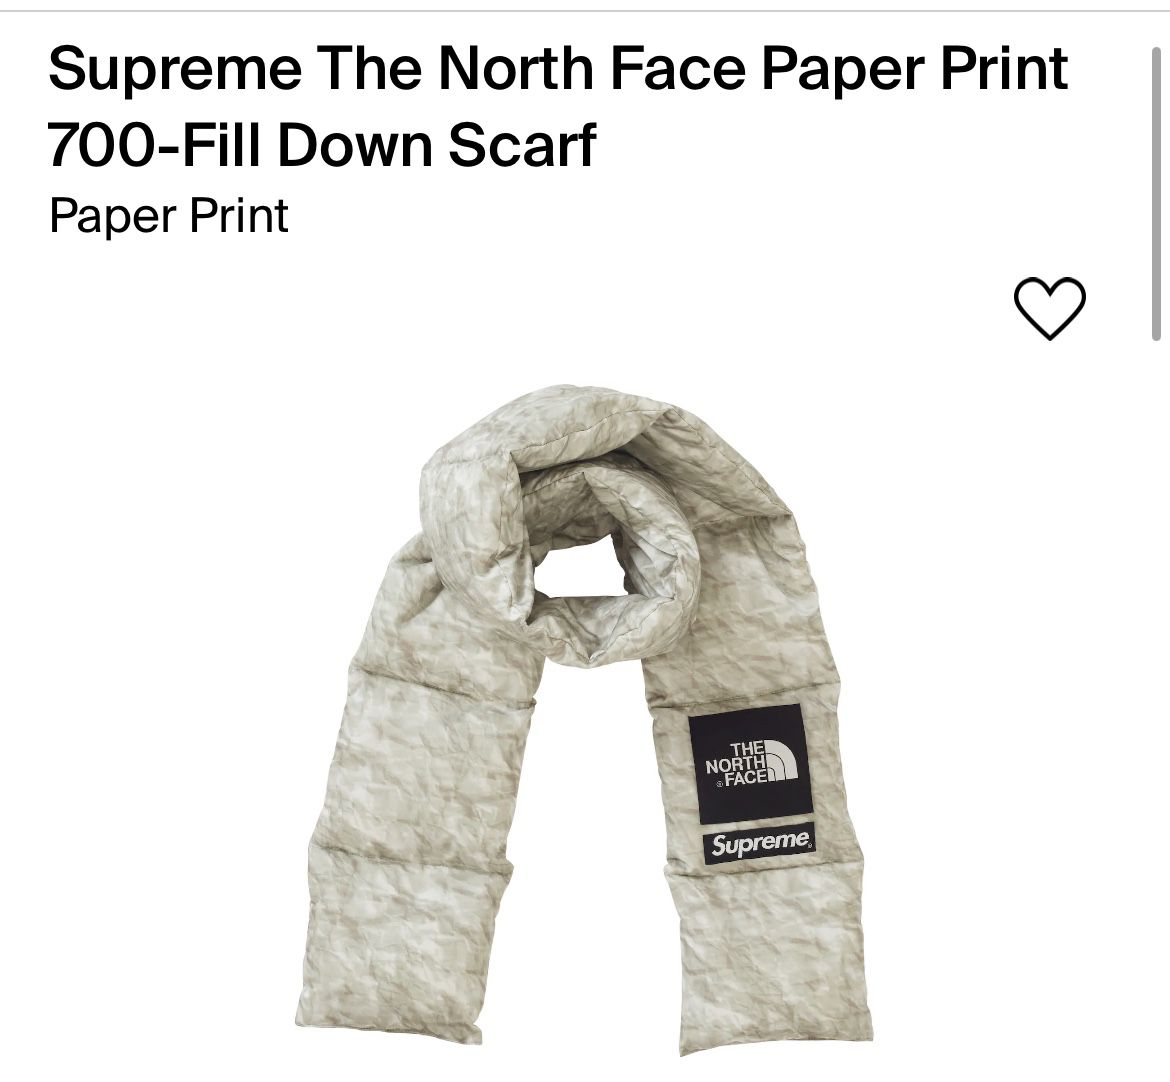 Supreme The North Face Paper Print 700-Fill Down Scarf